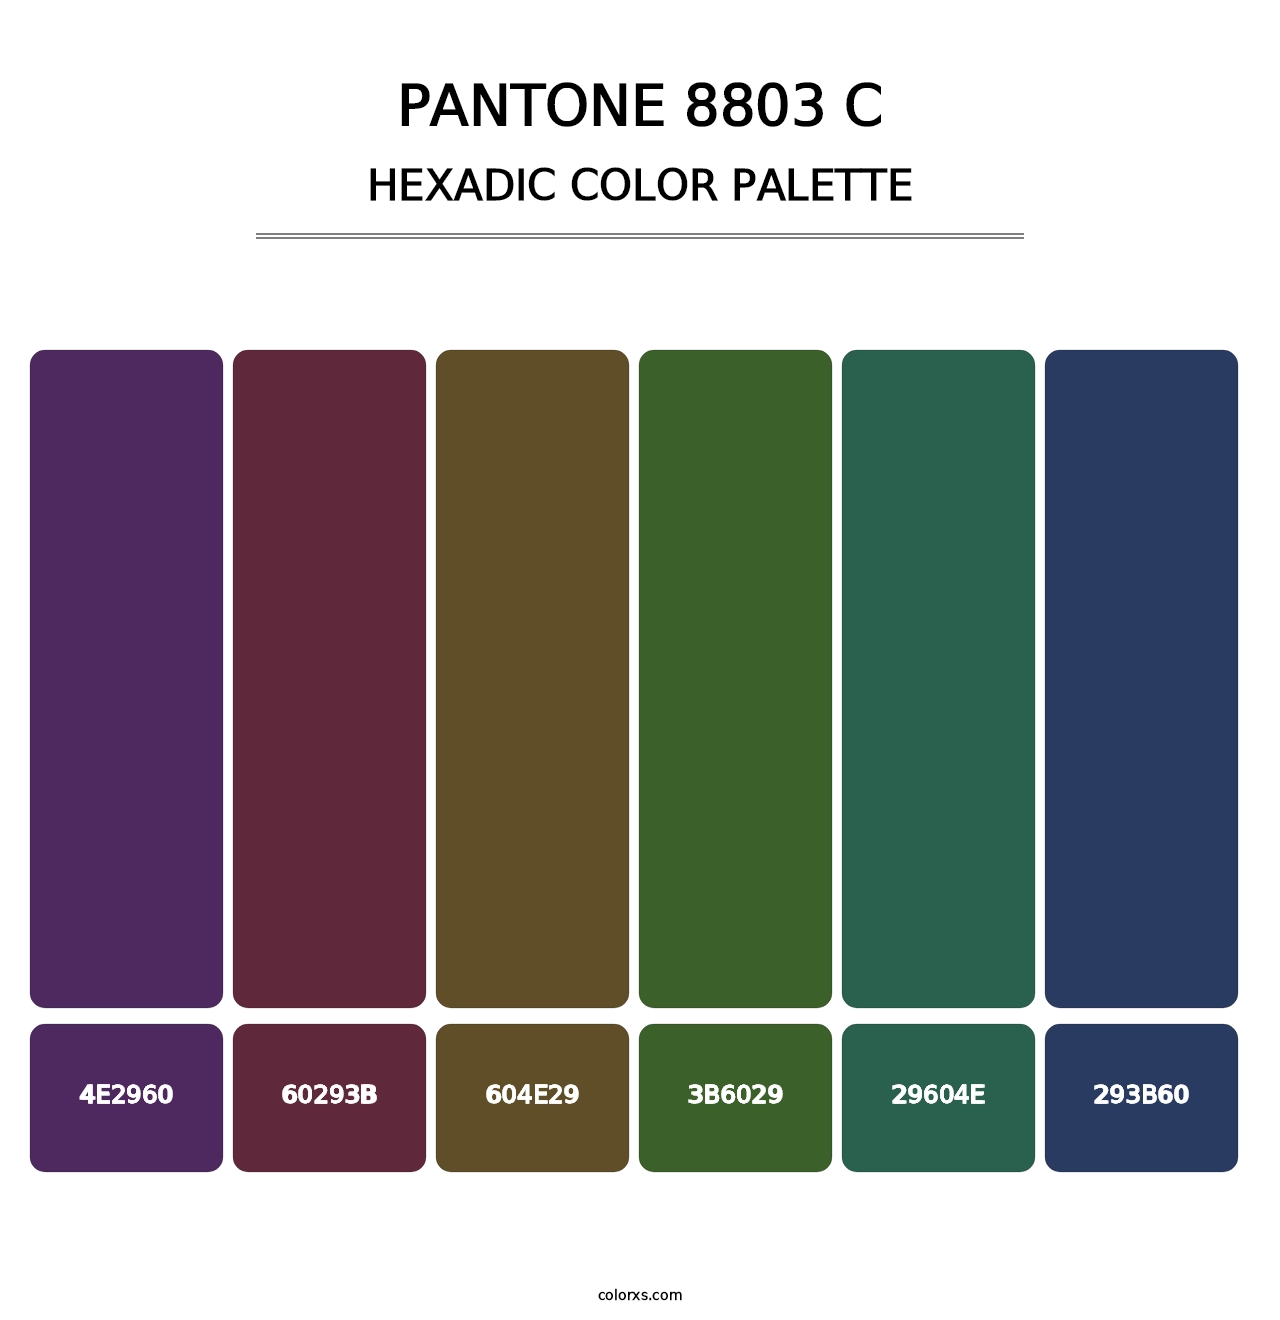 PANTONE 8803 C - Hexadic Color Palette